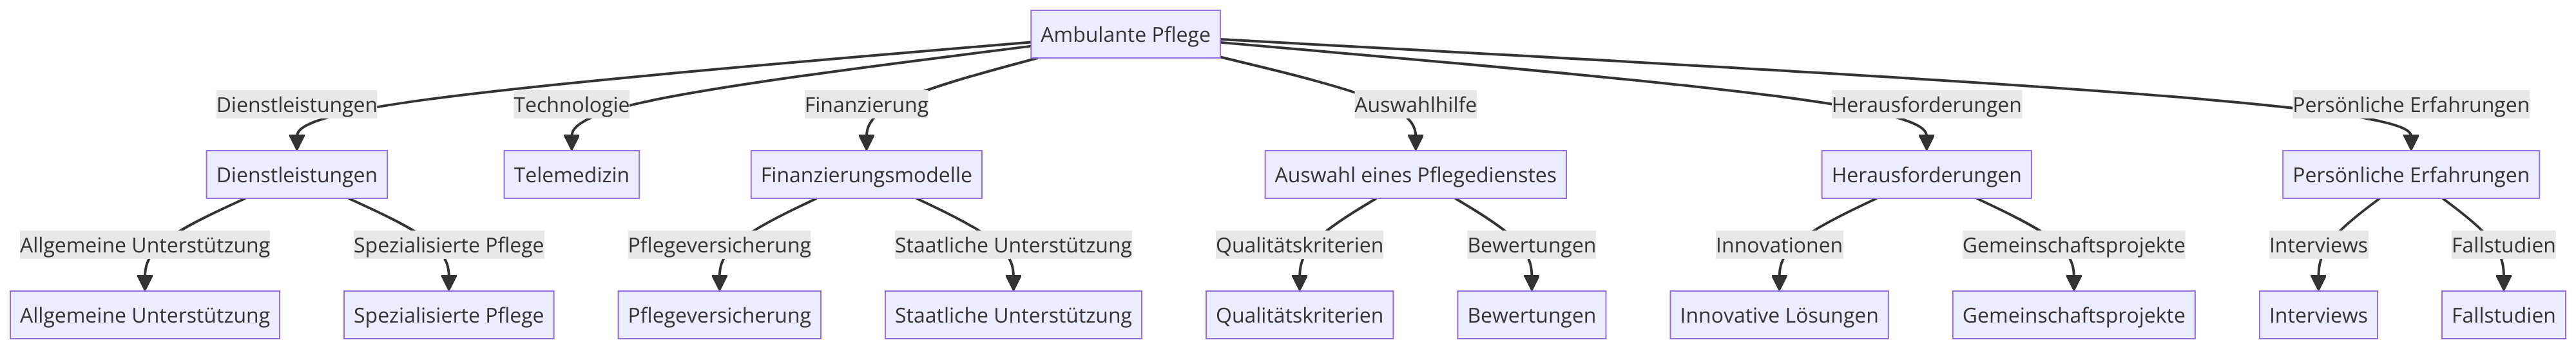 Diagramm zu Ambulante Pflege Düsseldorf 